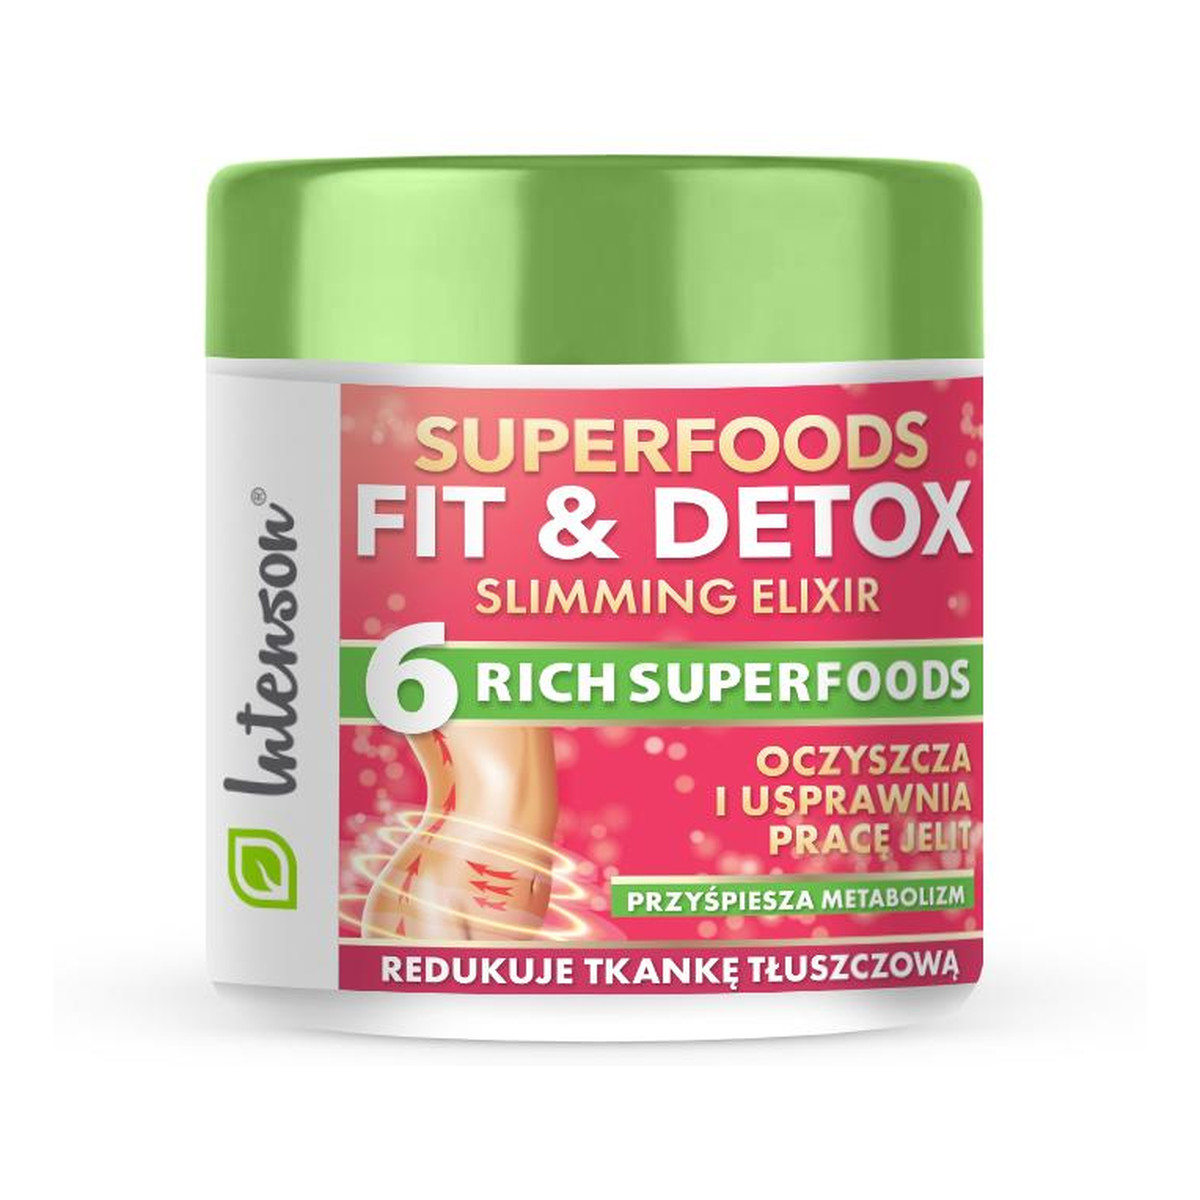 Intenson Superfoods fit & detox elixir koktajl błonnikowy suplement diety 135g